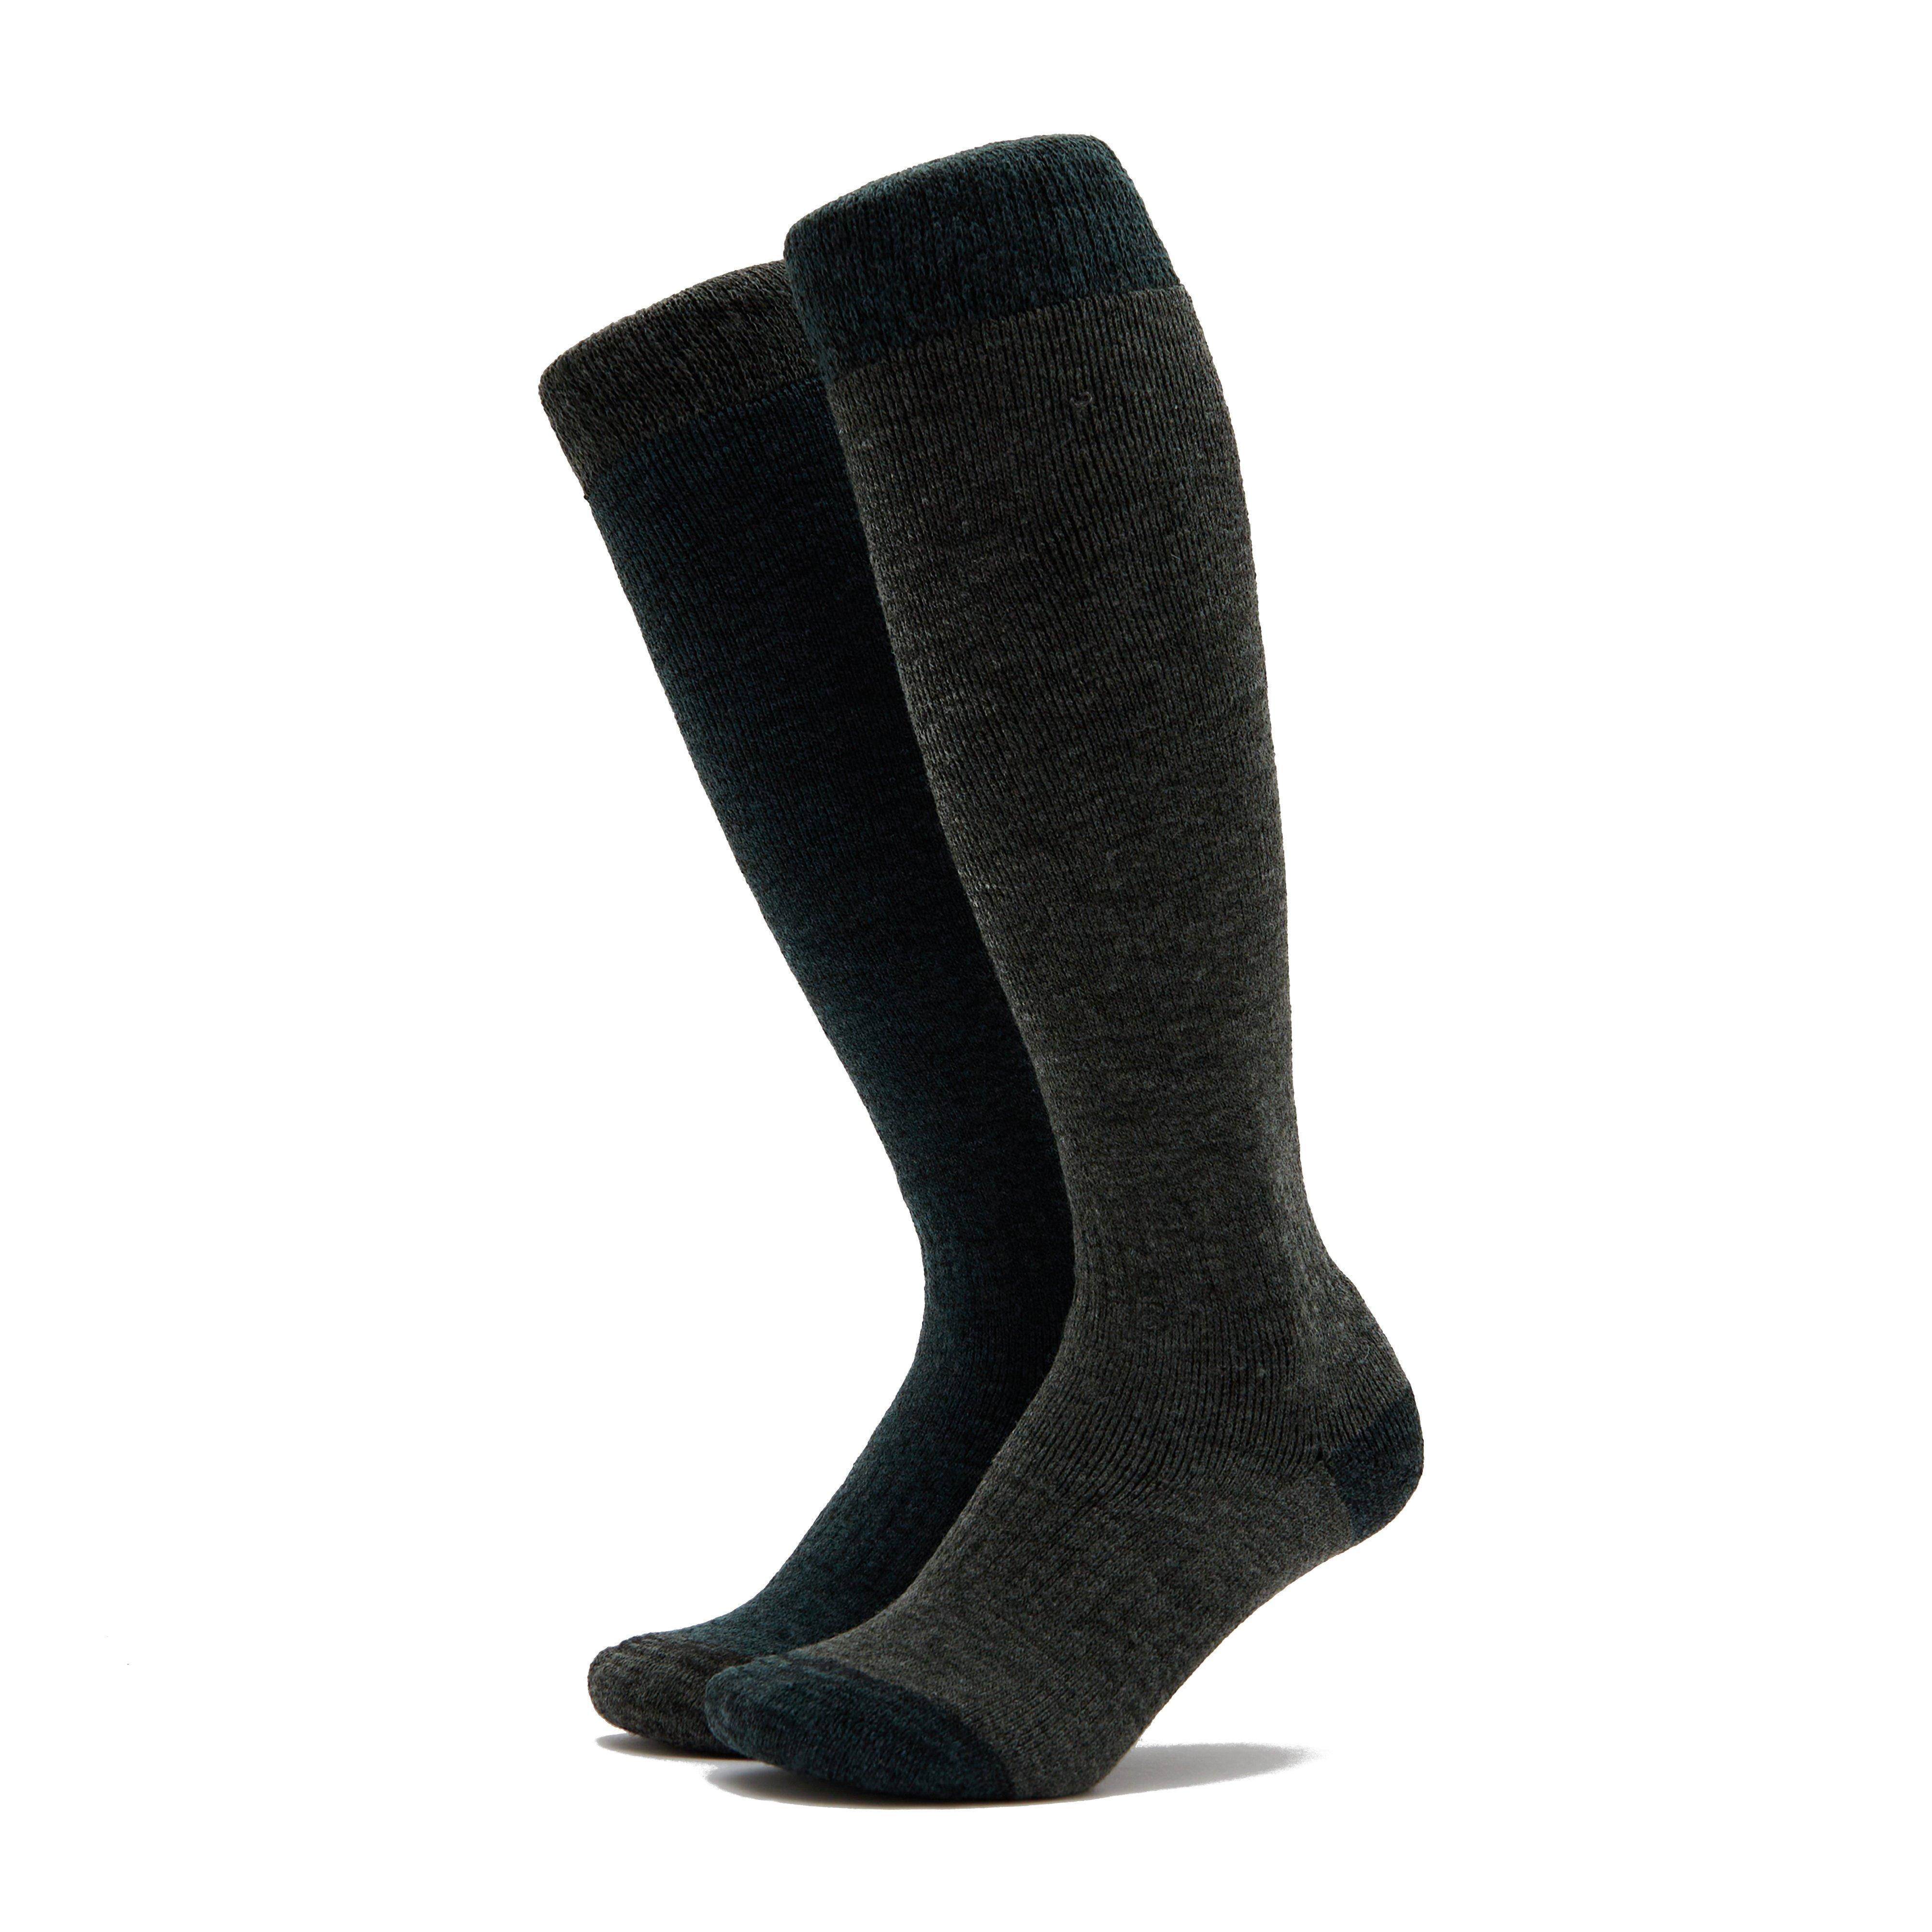 Country Long Socks 2 Pack Tweed/Loden